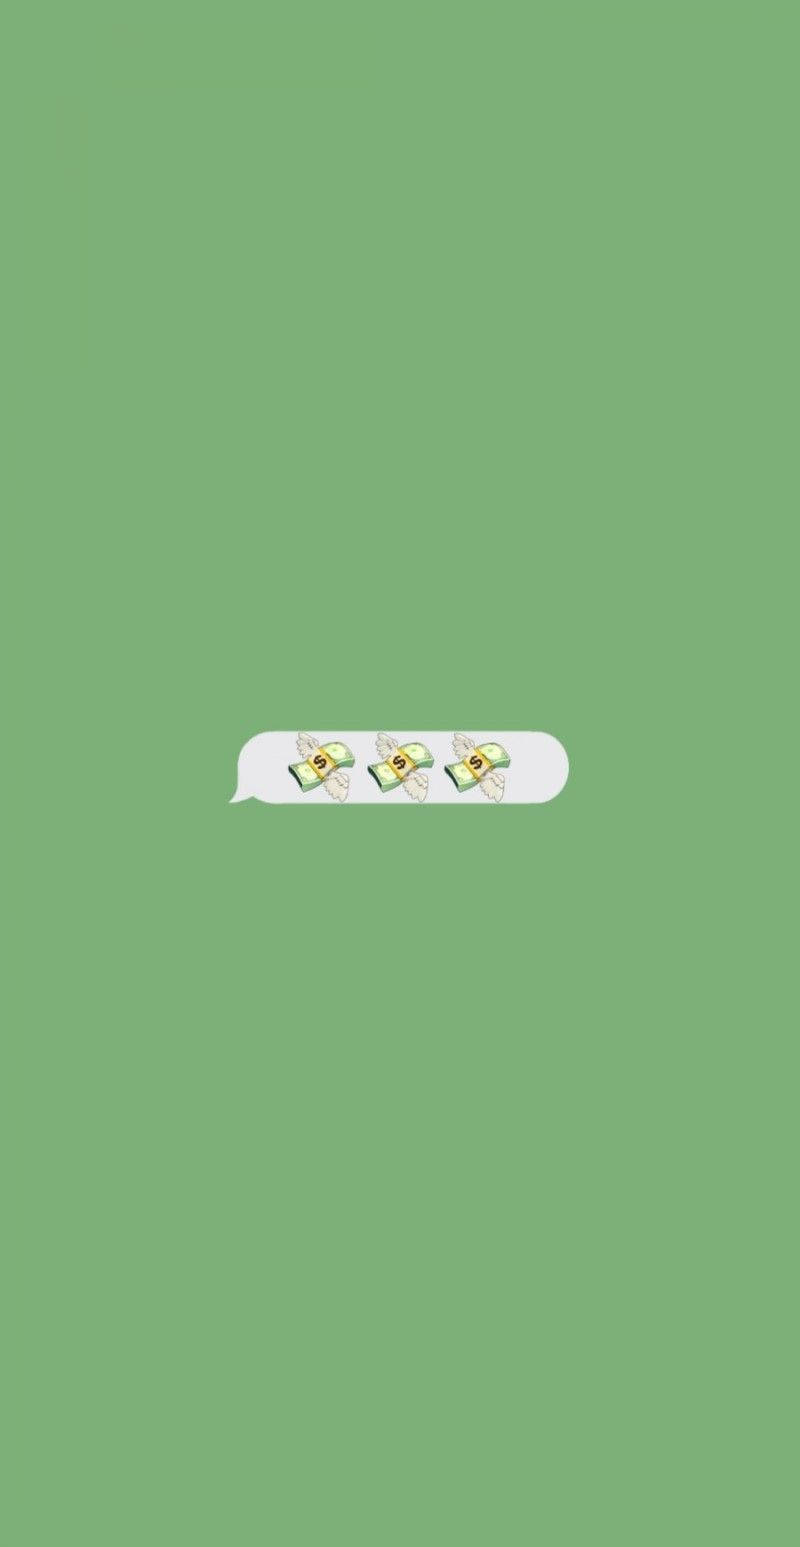 Mint Green Aesthetic Flying Dollar Background